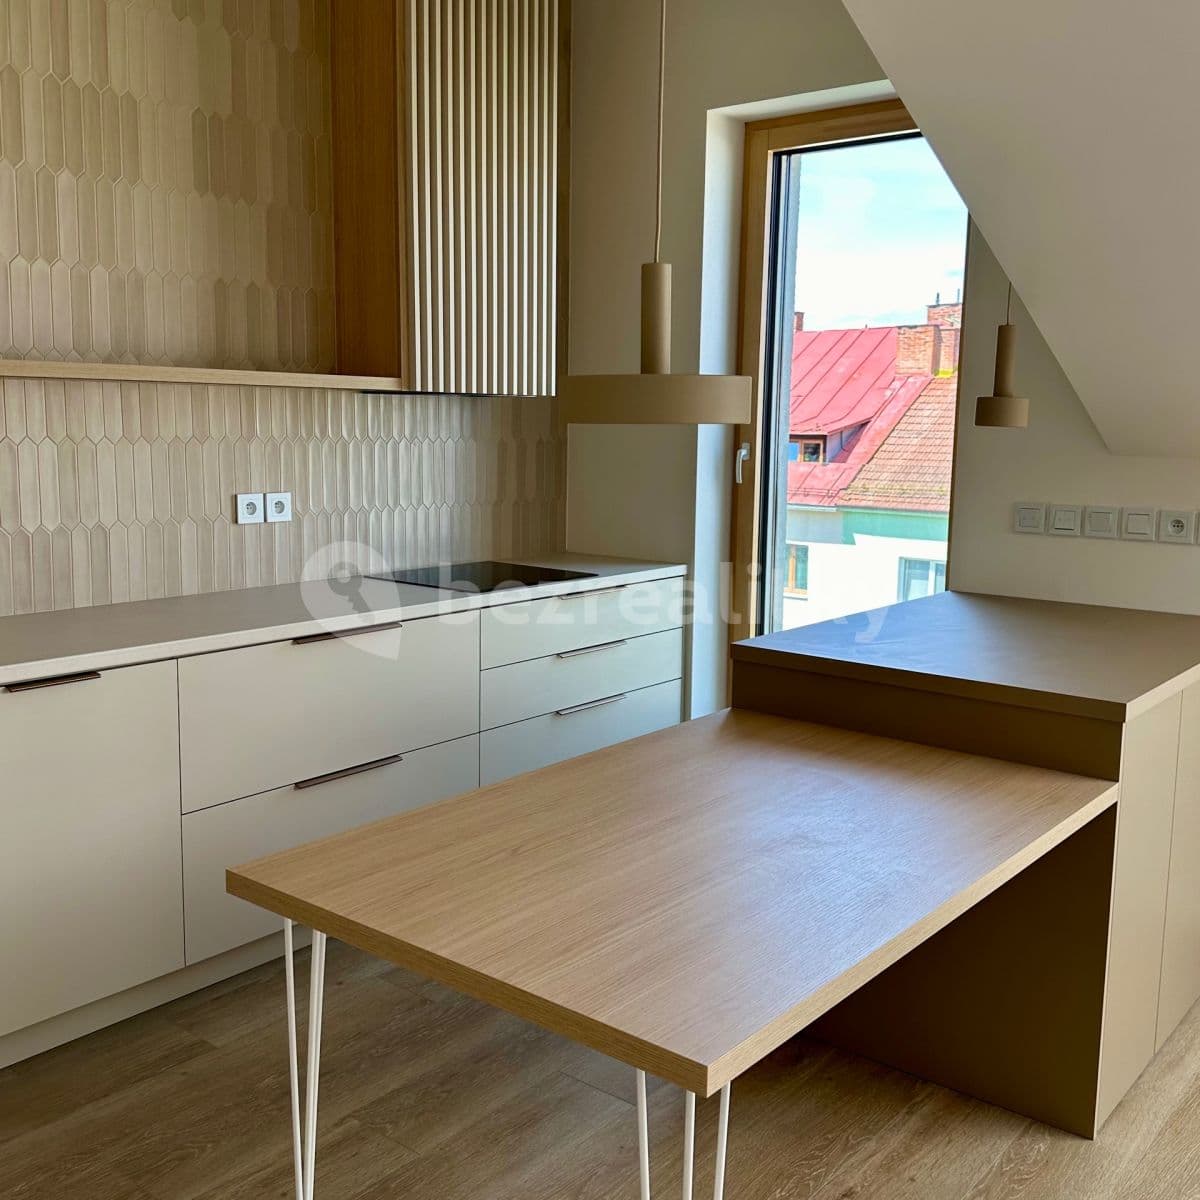 1 bedroom with open-plan kitchen flat to rent, 67 m², Šmejkalova, Brno, Jihomoravský Region